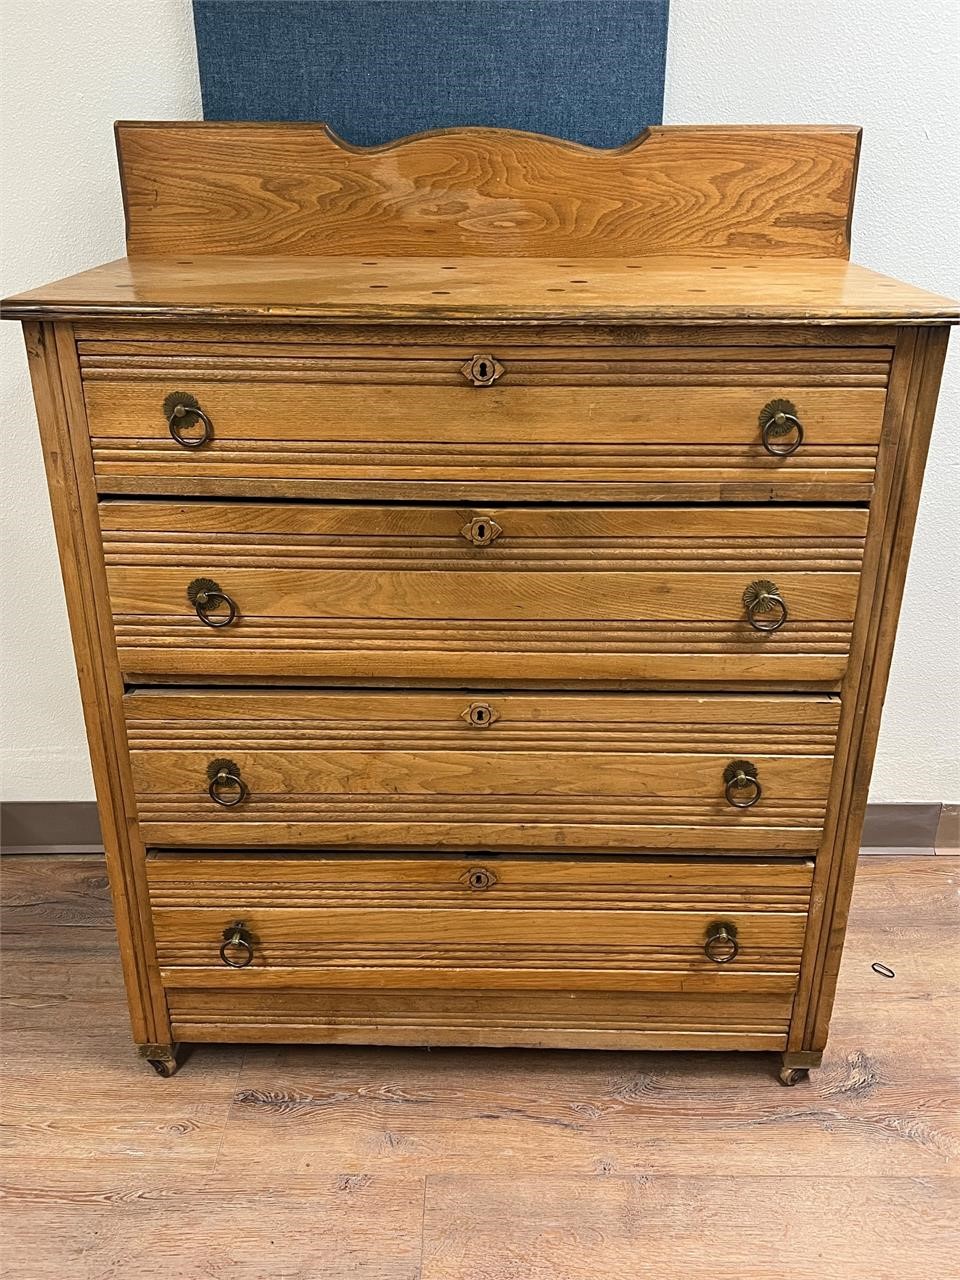 Beautiful wooden vintage dresser